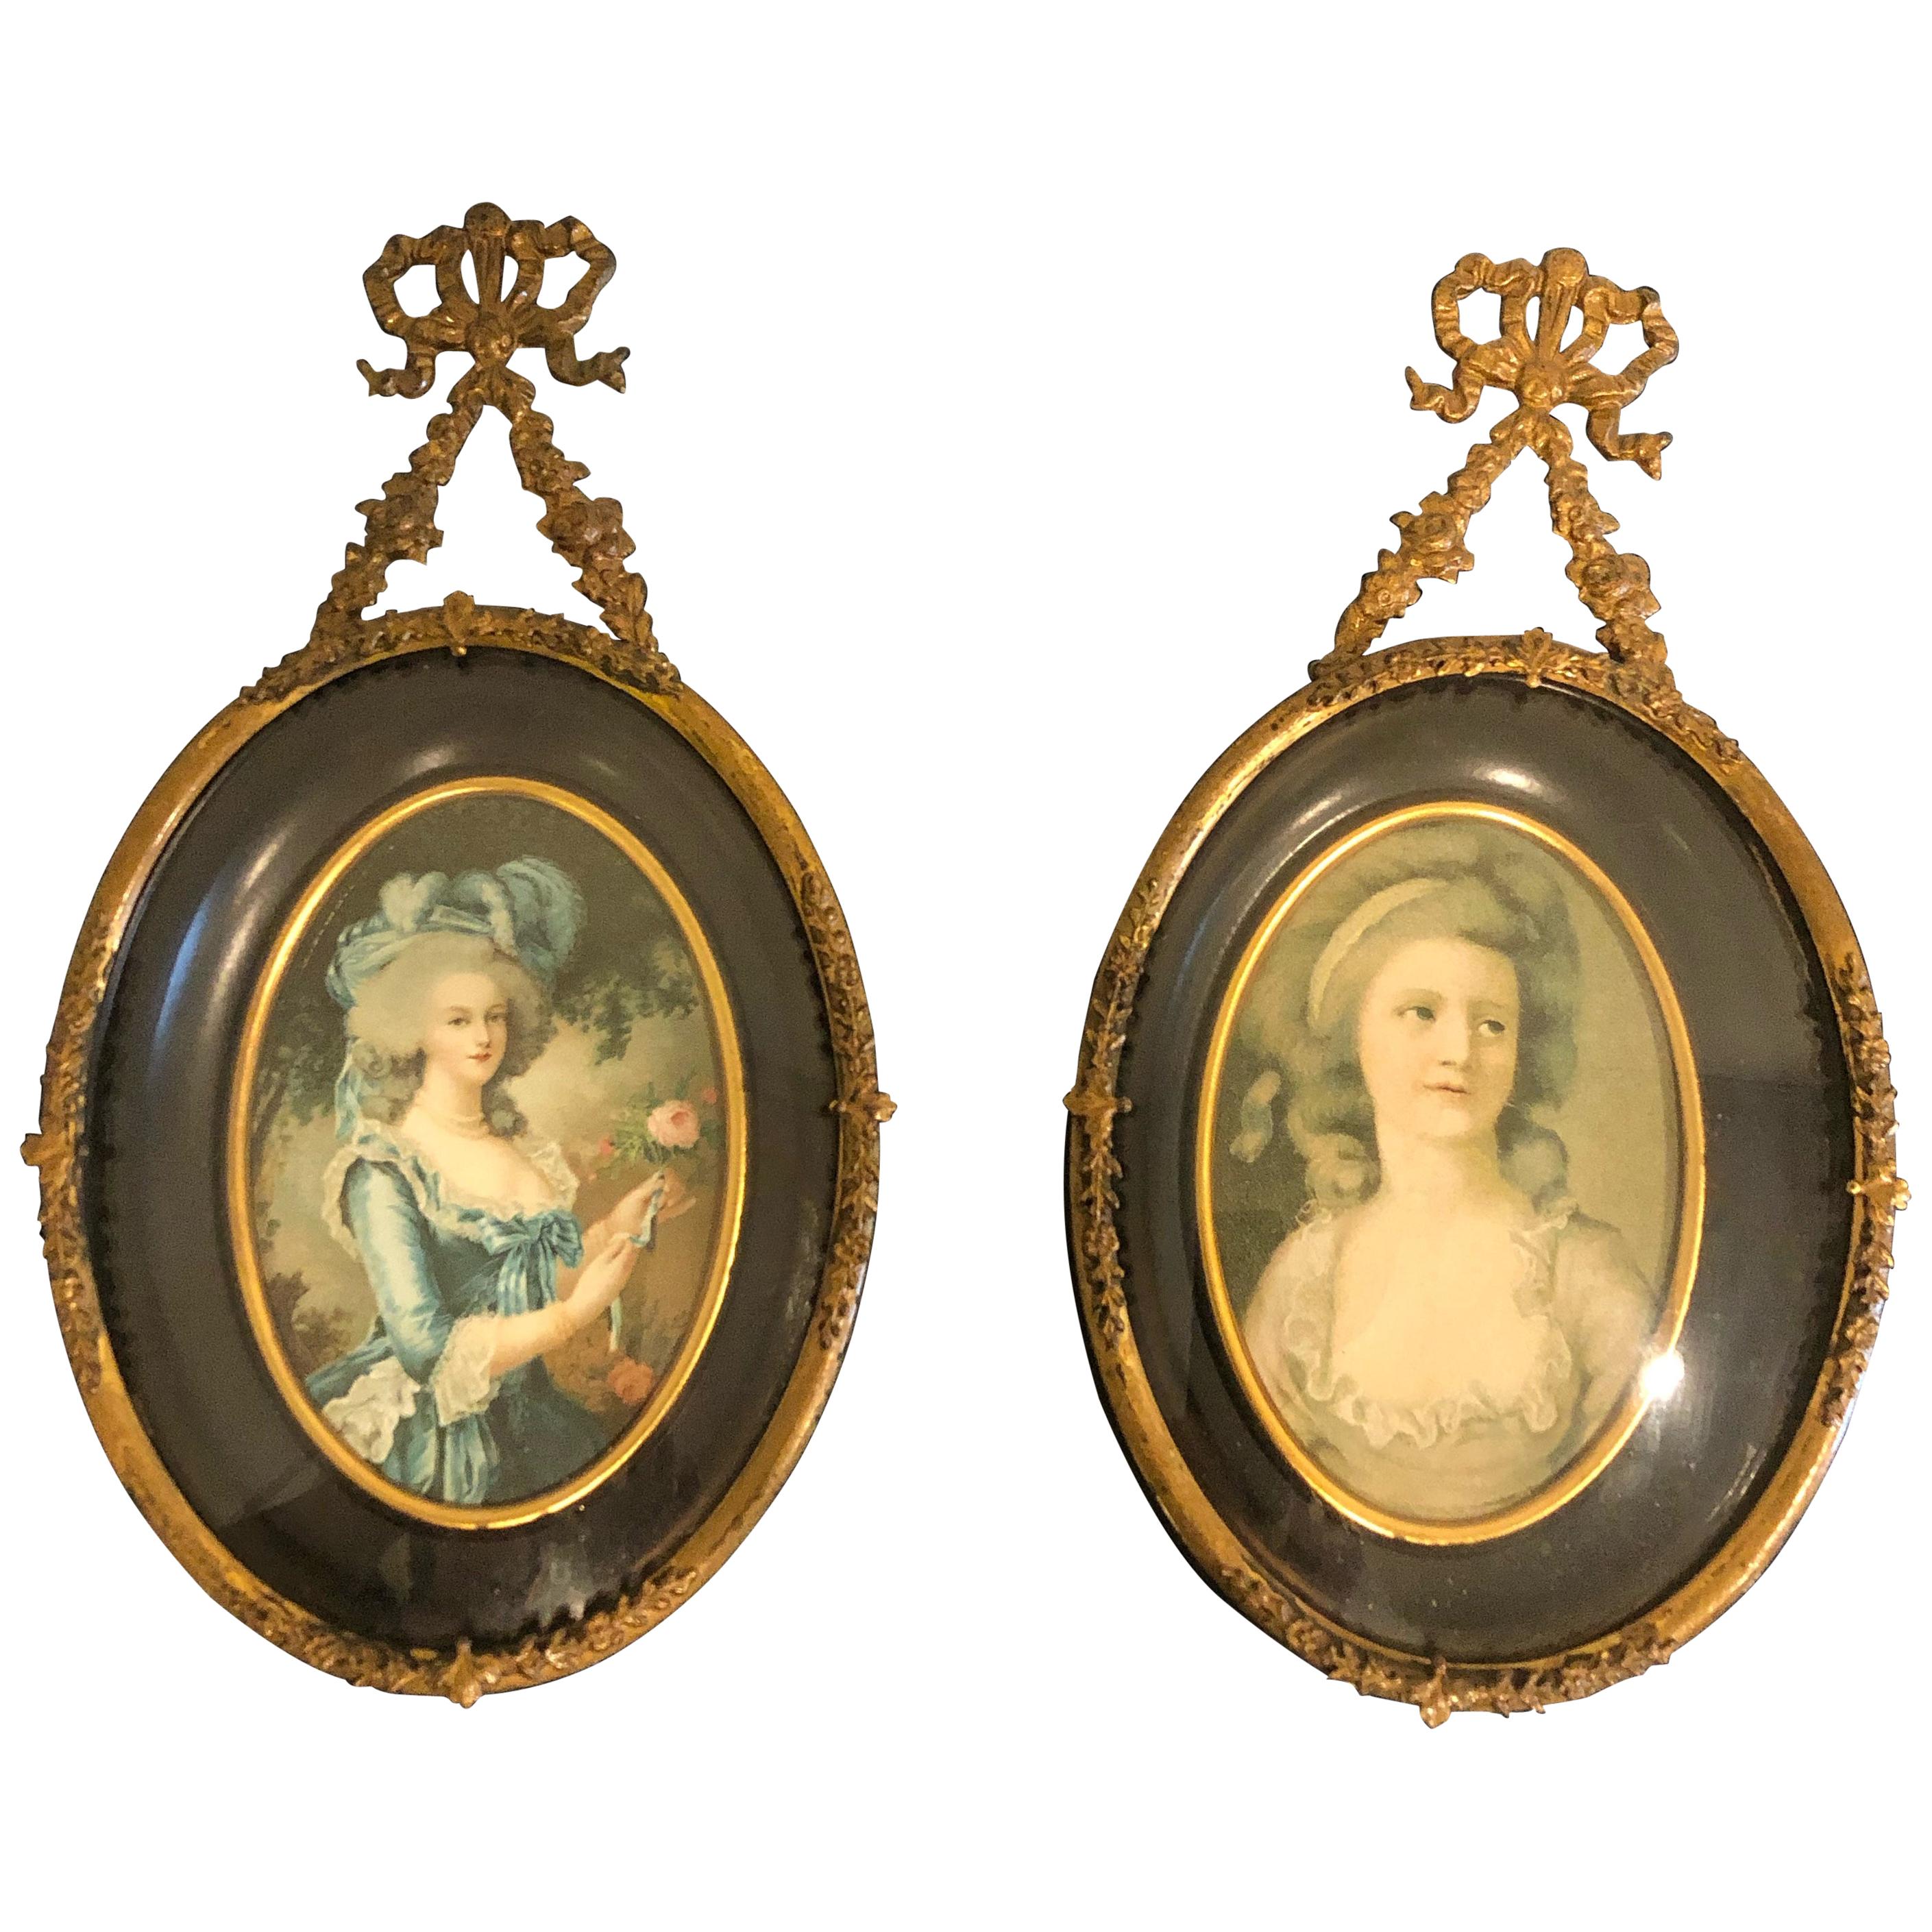 Lovely Pair of Antique Portrait Miniatures in Fancy Brass Frames